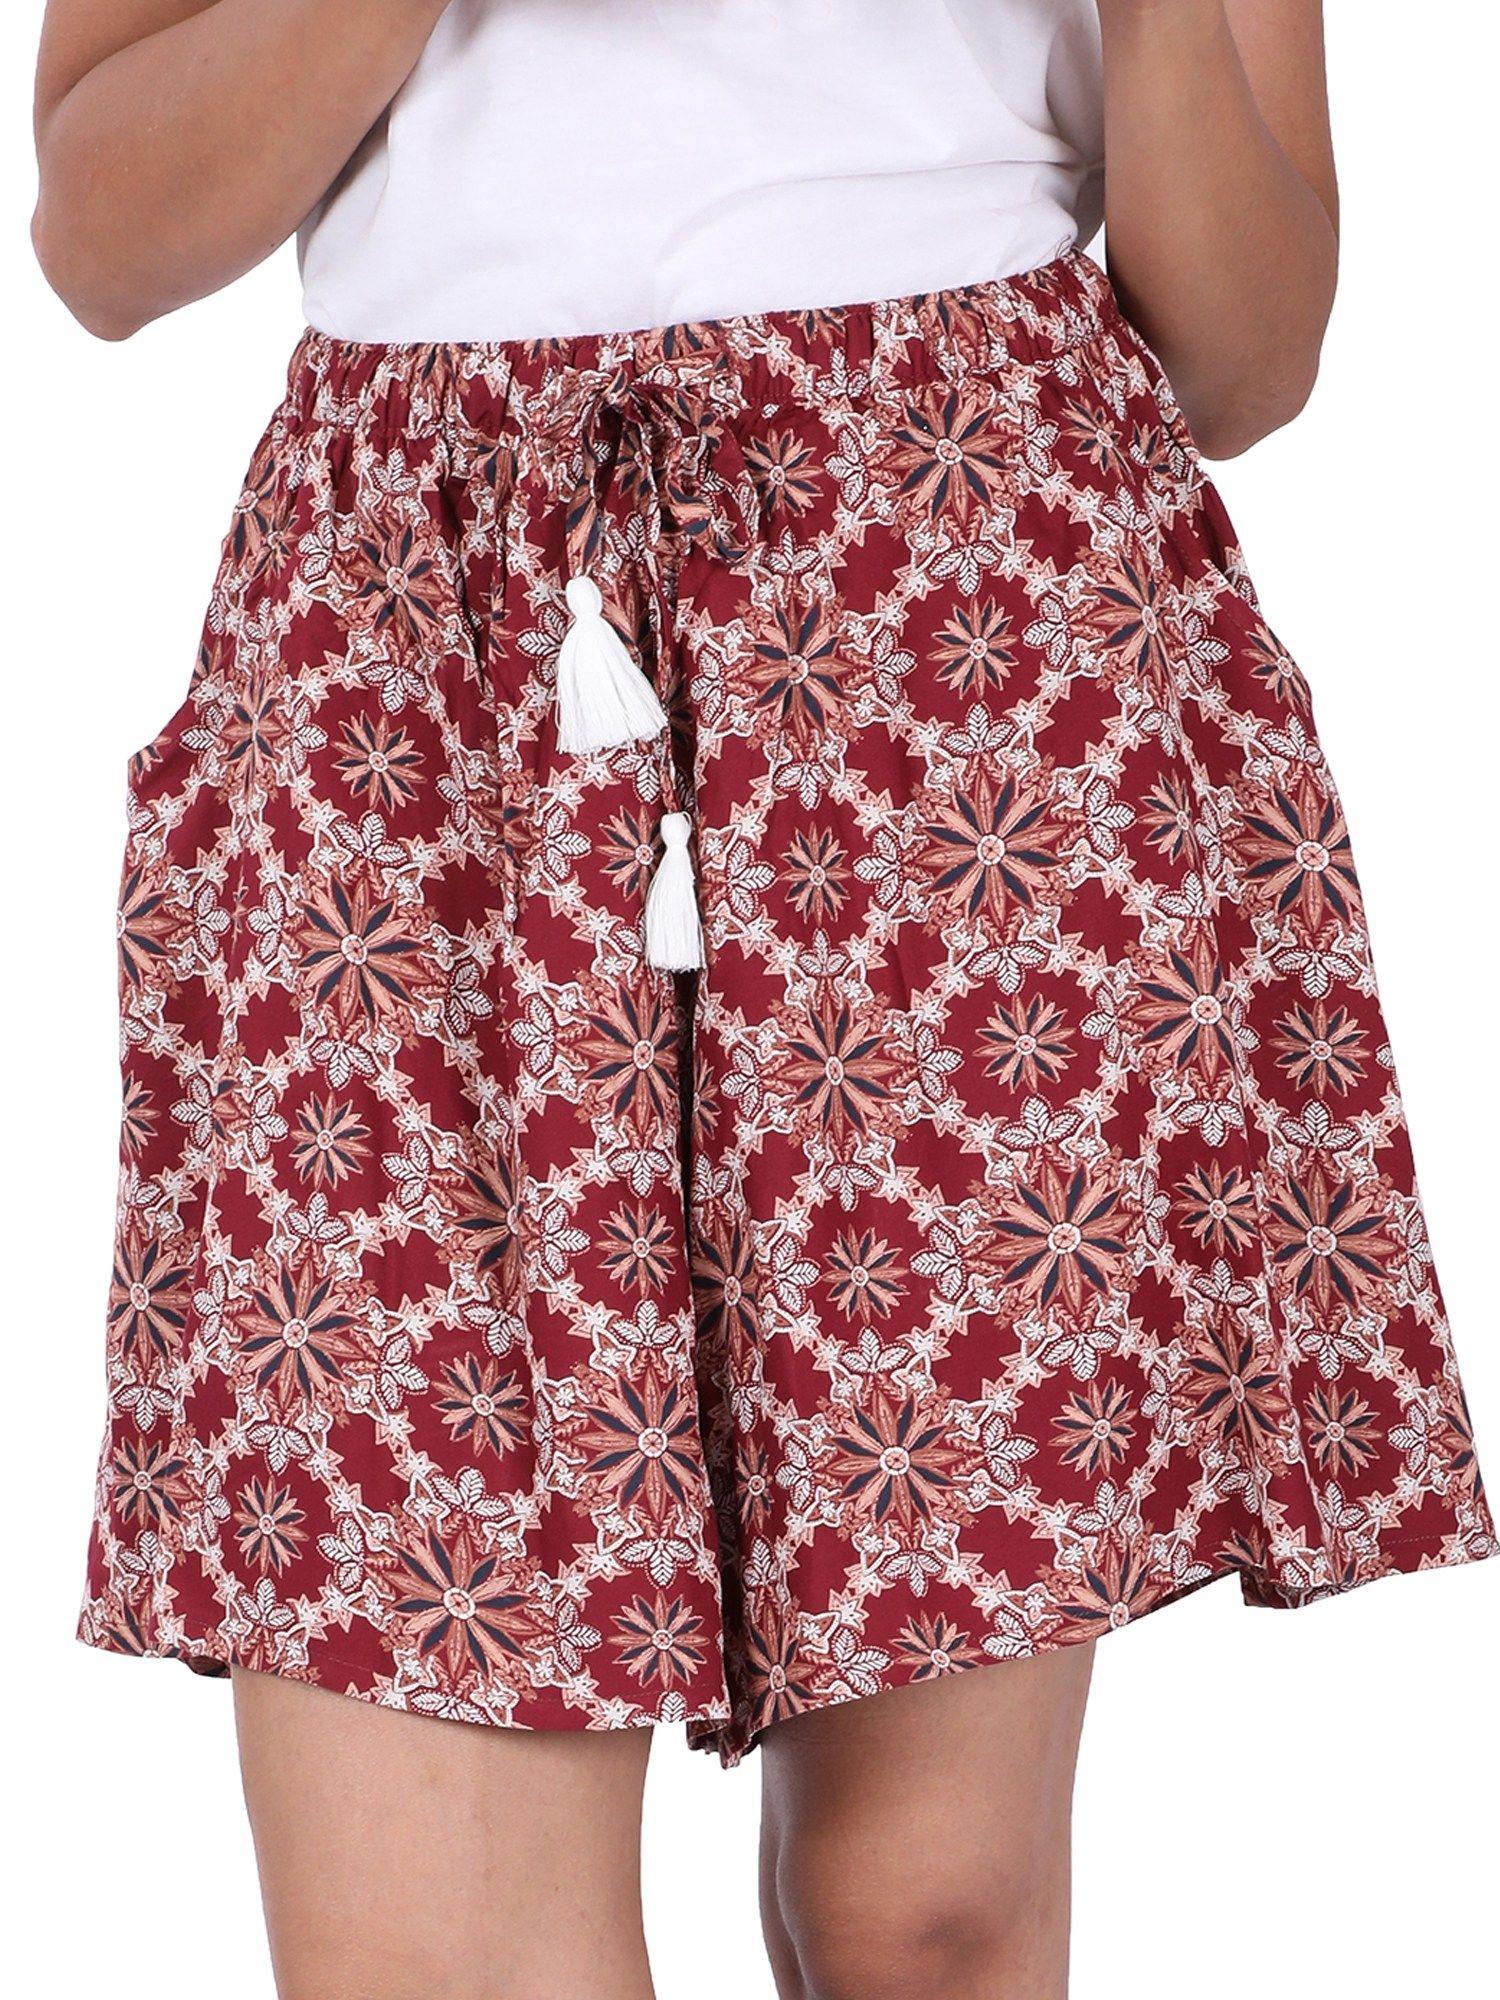 culottes shorts for women-maroon geo print